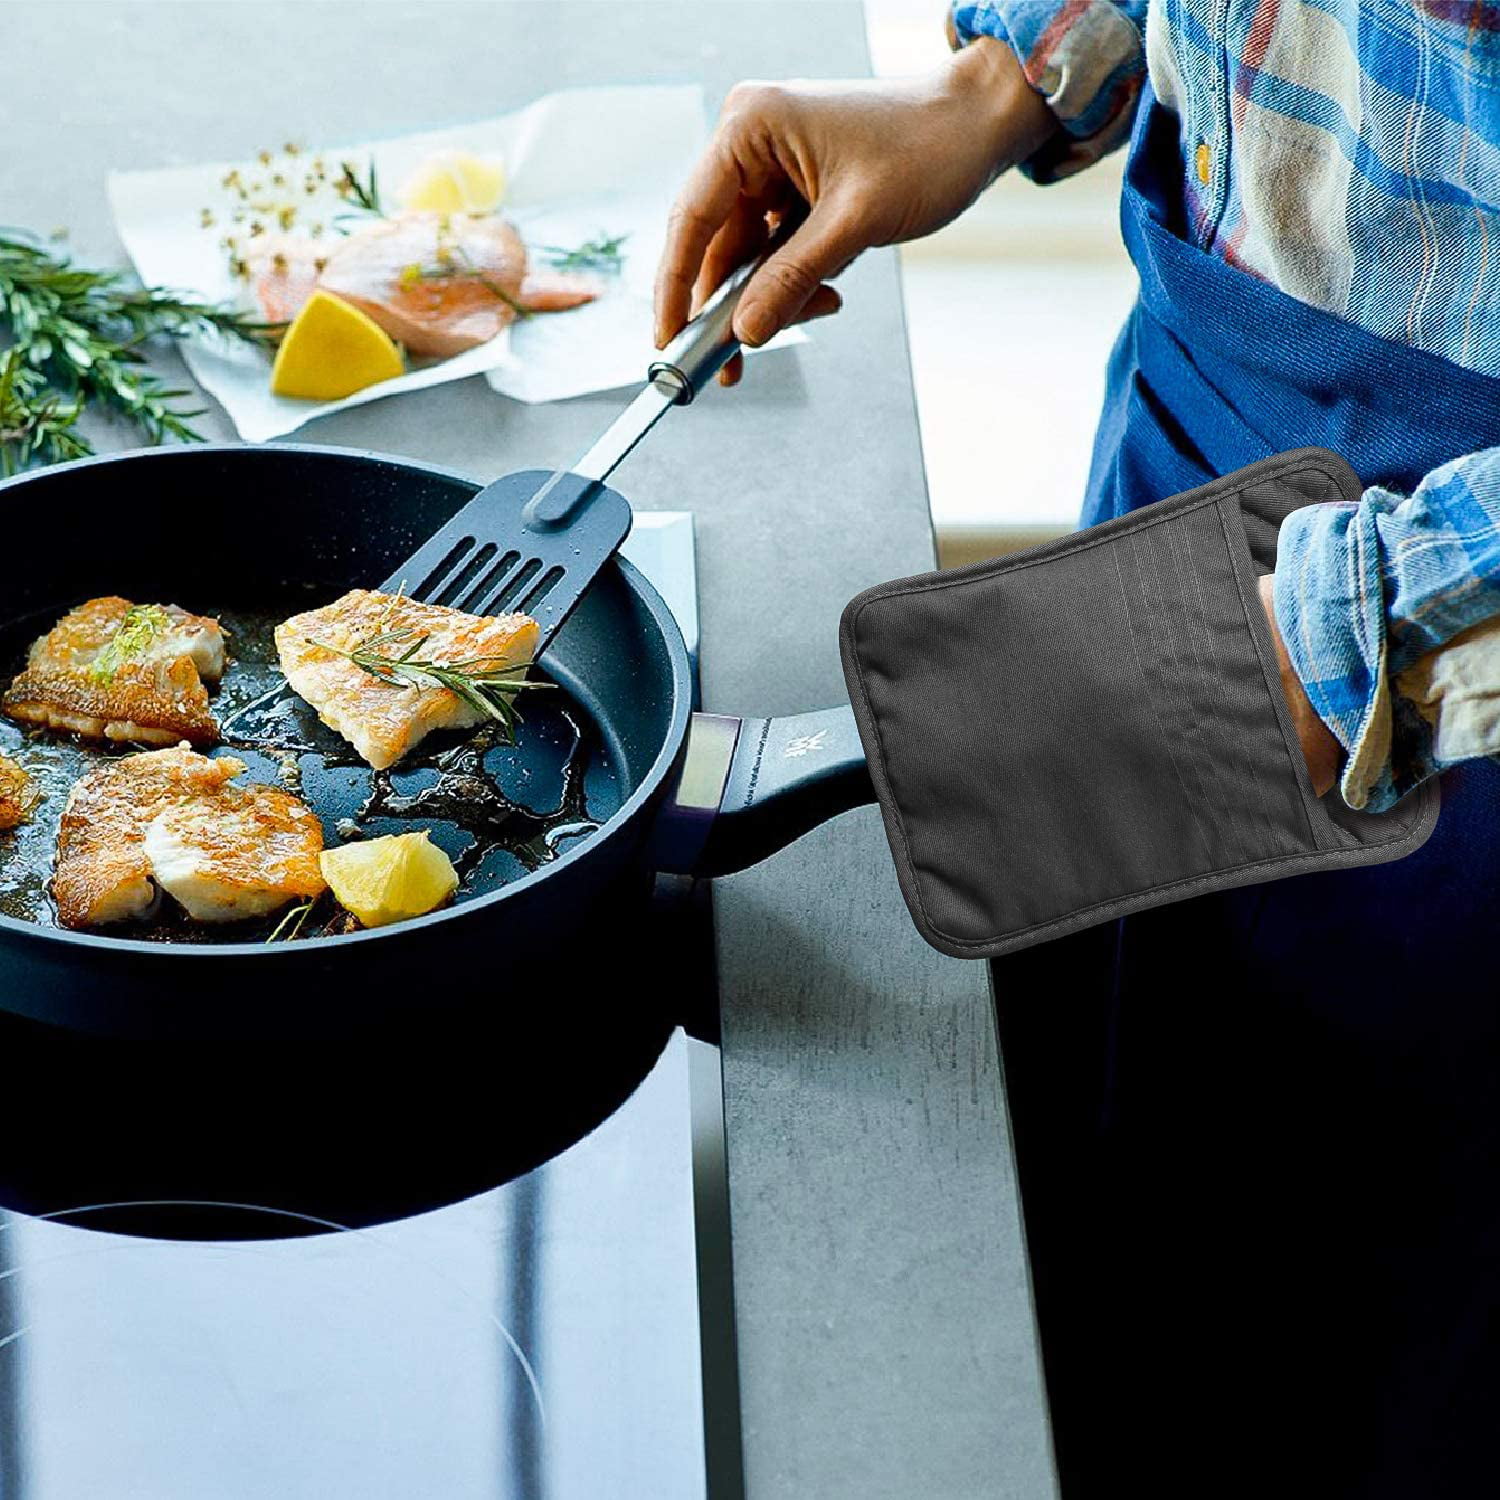 7”x 9” Set of 4 Cotton Pocket Pot Holder Kitchen Hot Pad Heat Resistant Black Kitchen Basic Trivet for Cooking and Baking